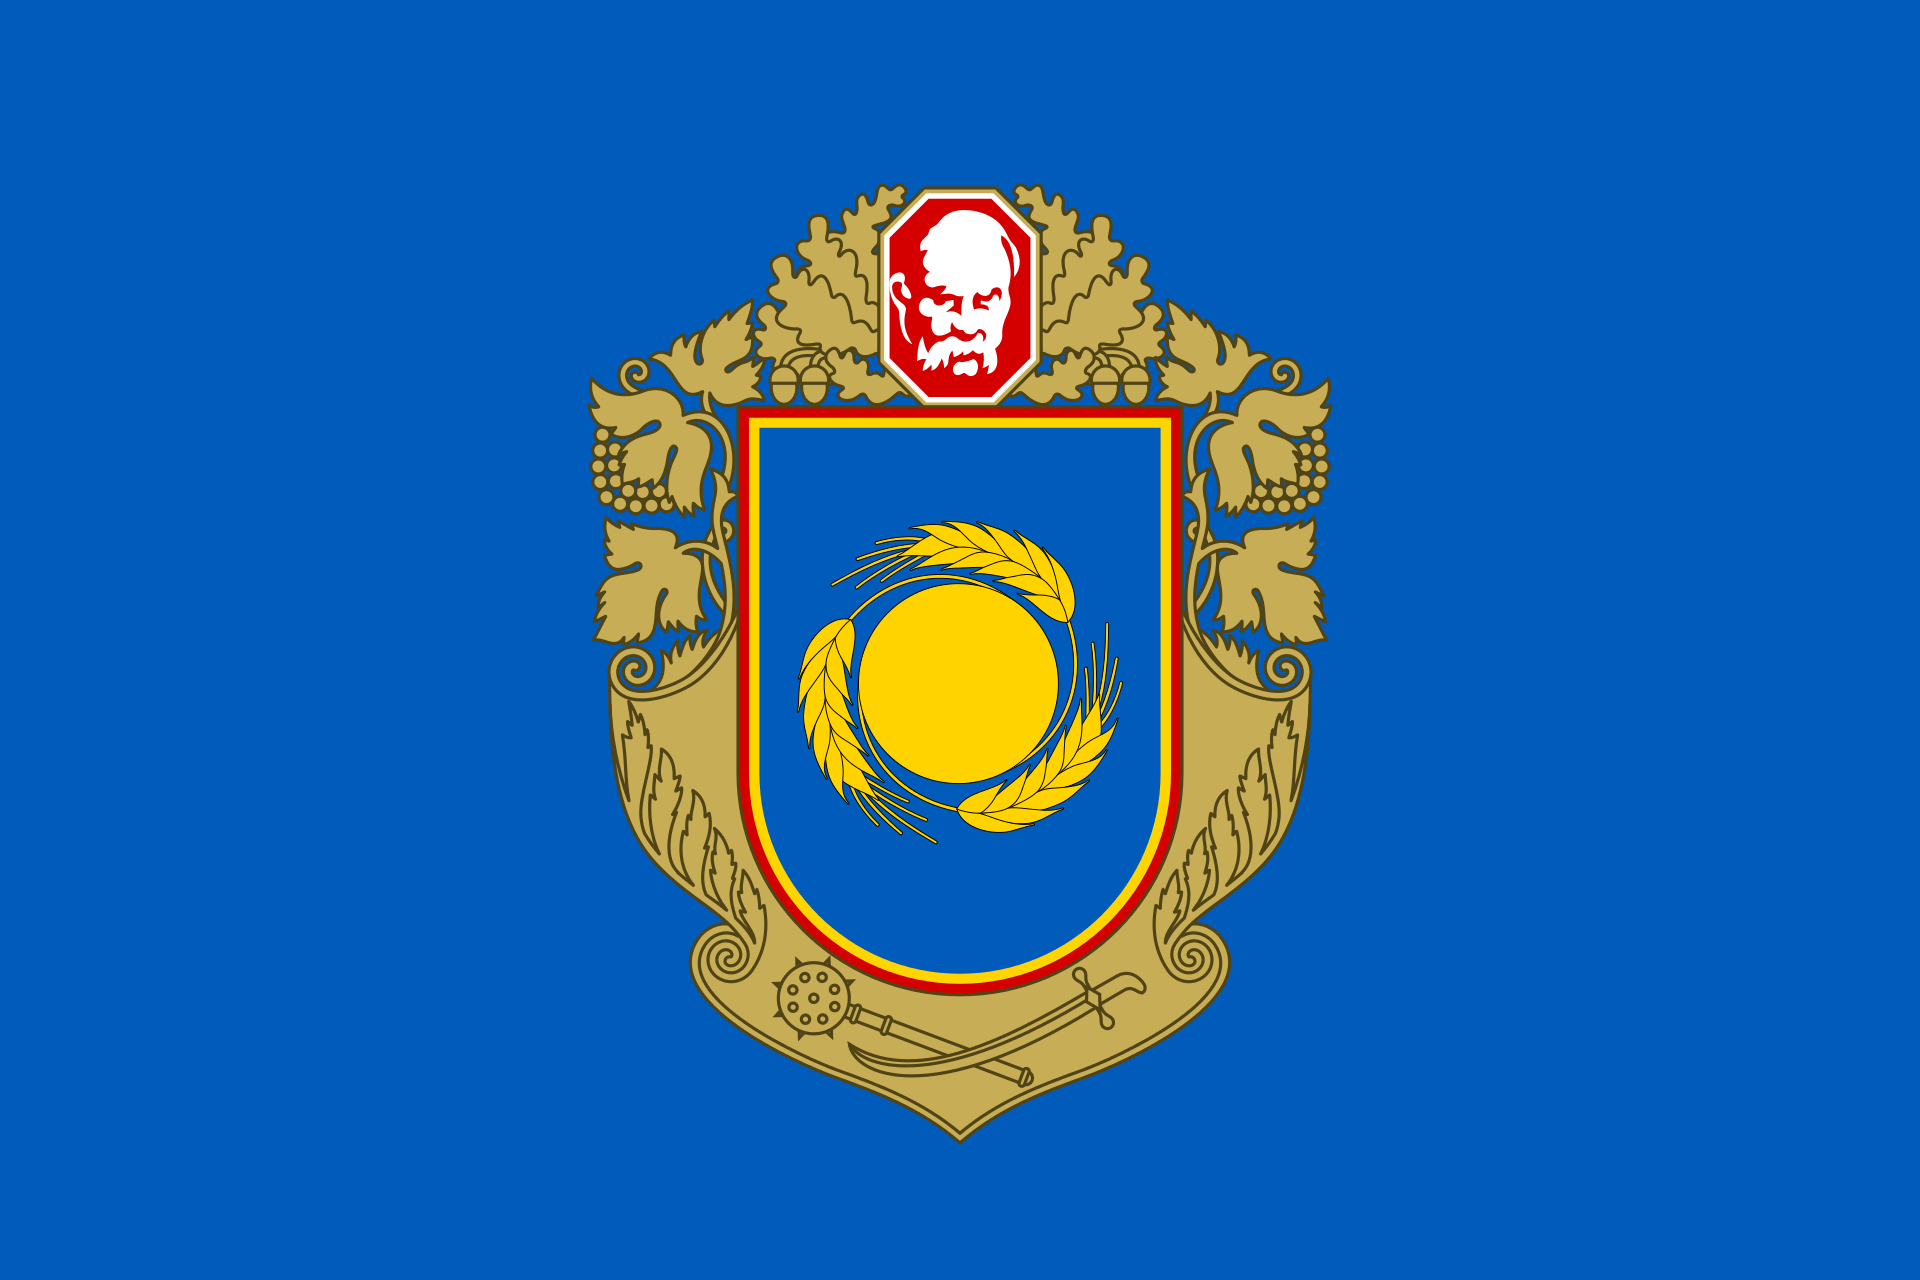 Флаг Черкасской области